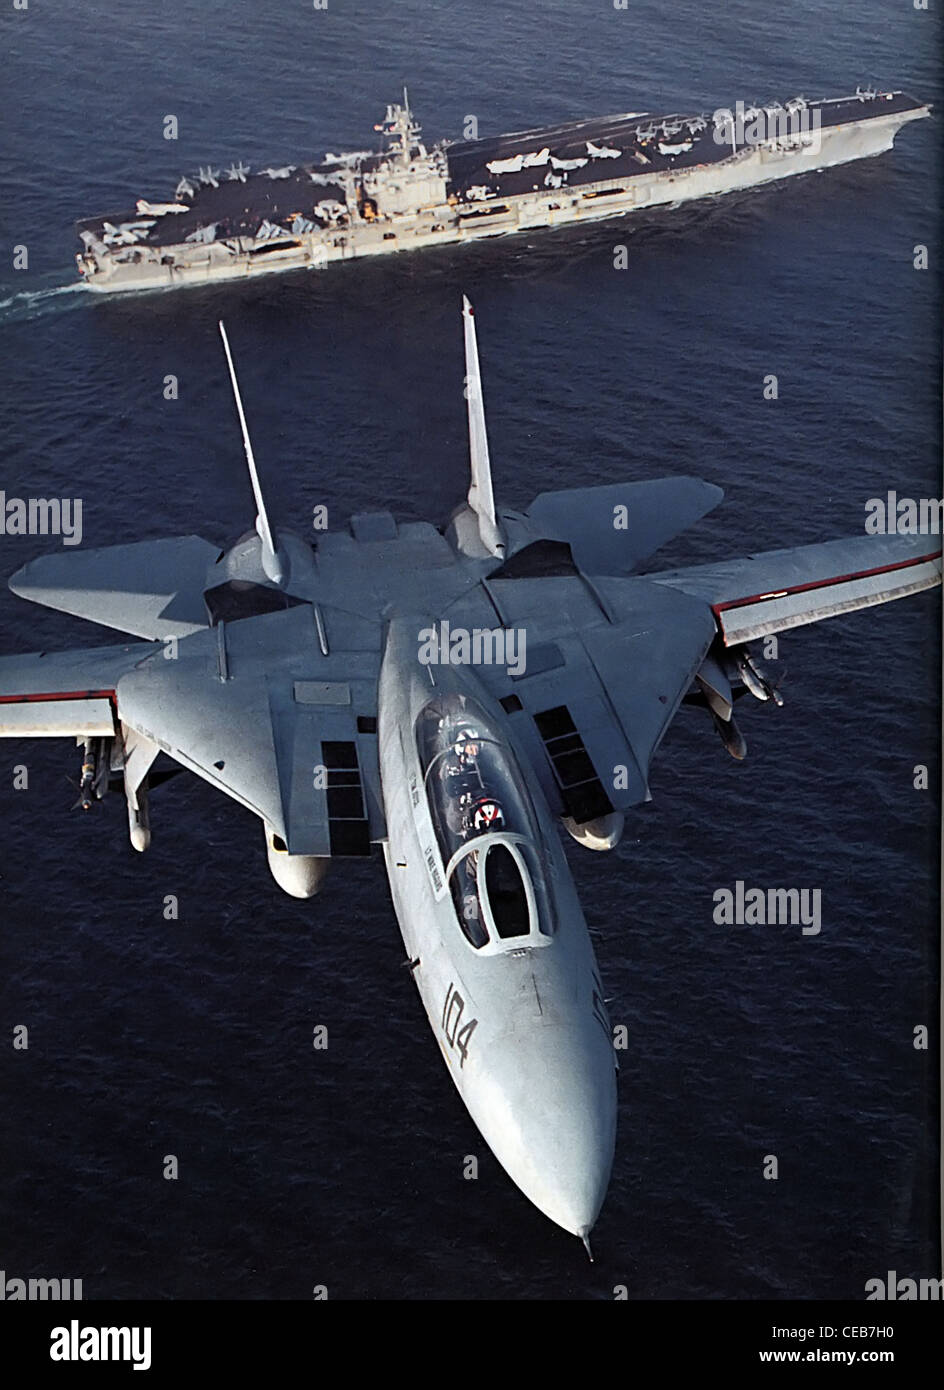 F14 Tomcat flying above Aircraft carrier USS Carl Vinson CVN 70 Stock Photo